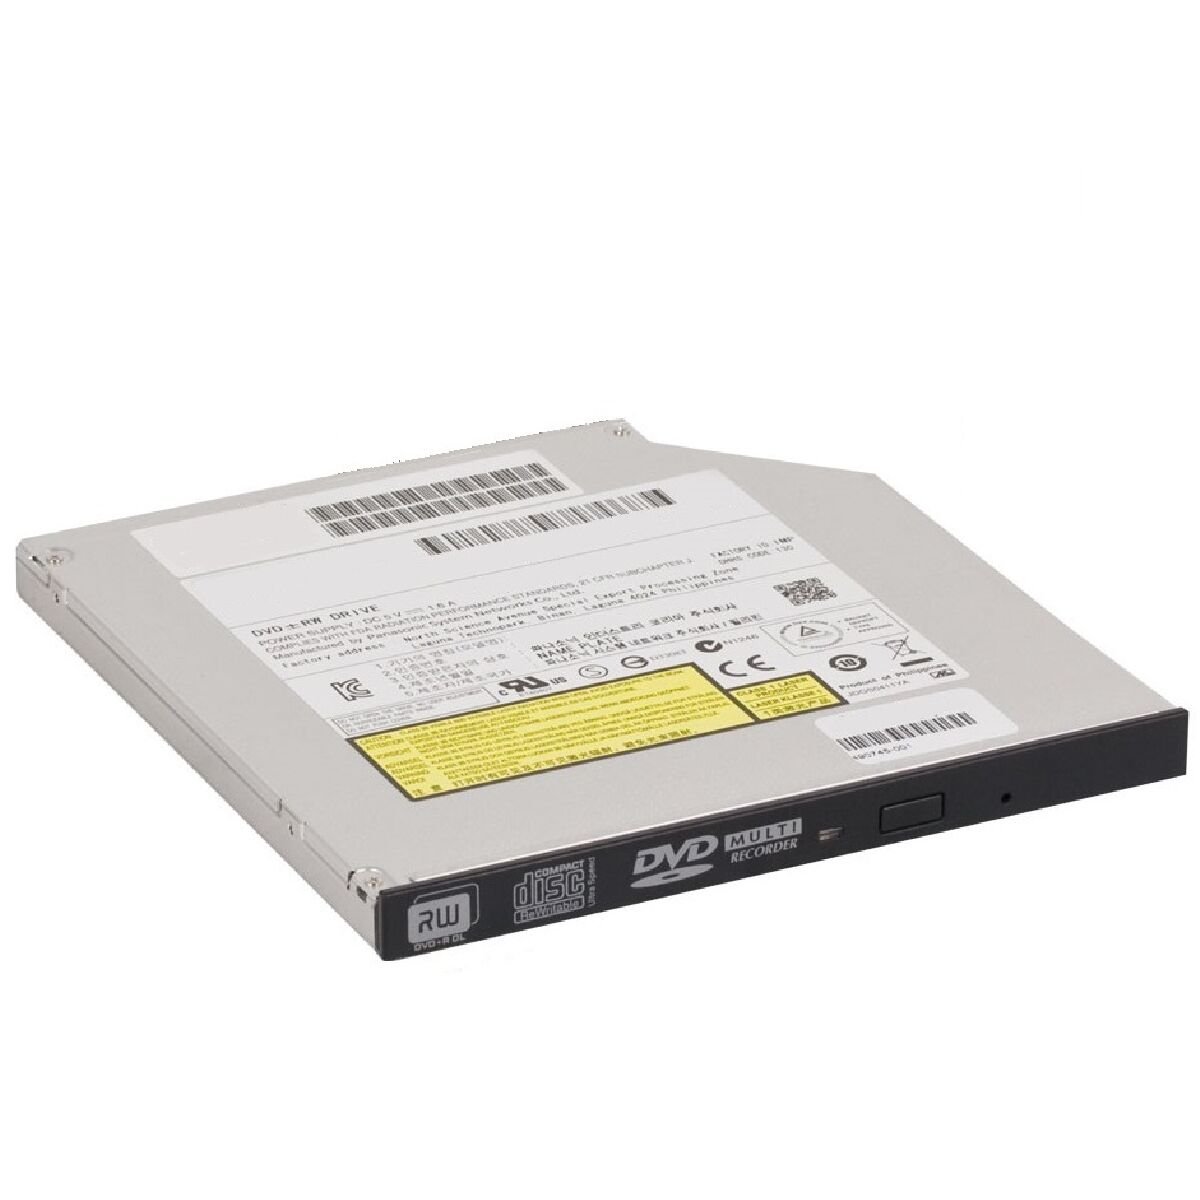 Packard Bell Z5WTC, Z5WT2, V5WT2 DVD-RW Slim Tip DVD Yazıcı